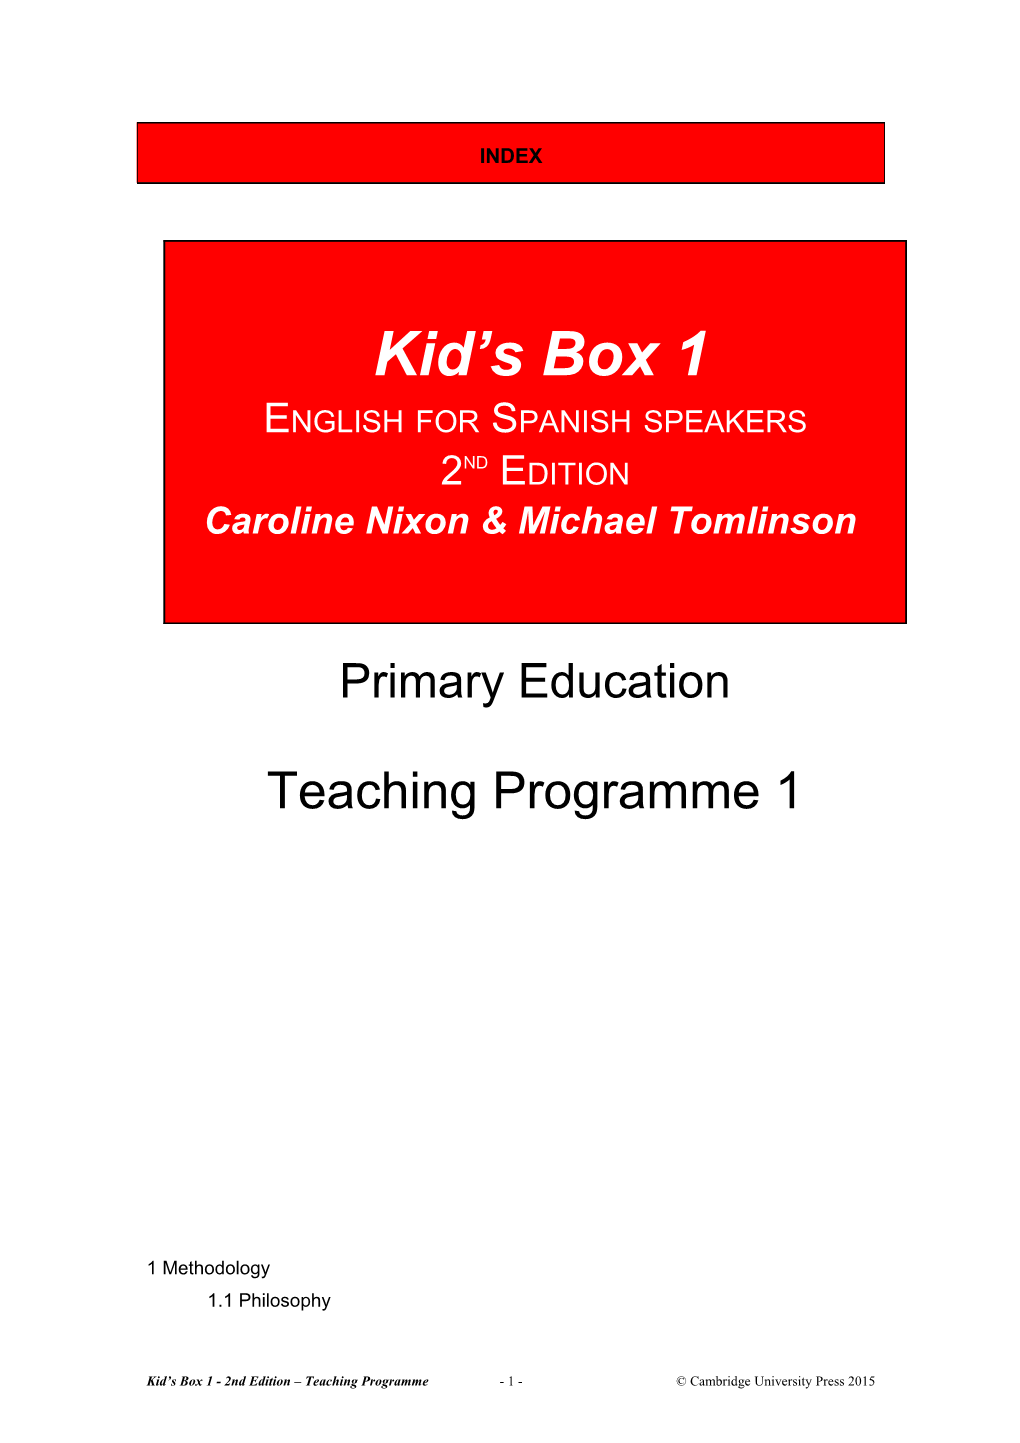 Teaching Programme 1